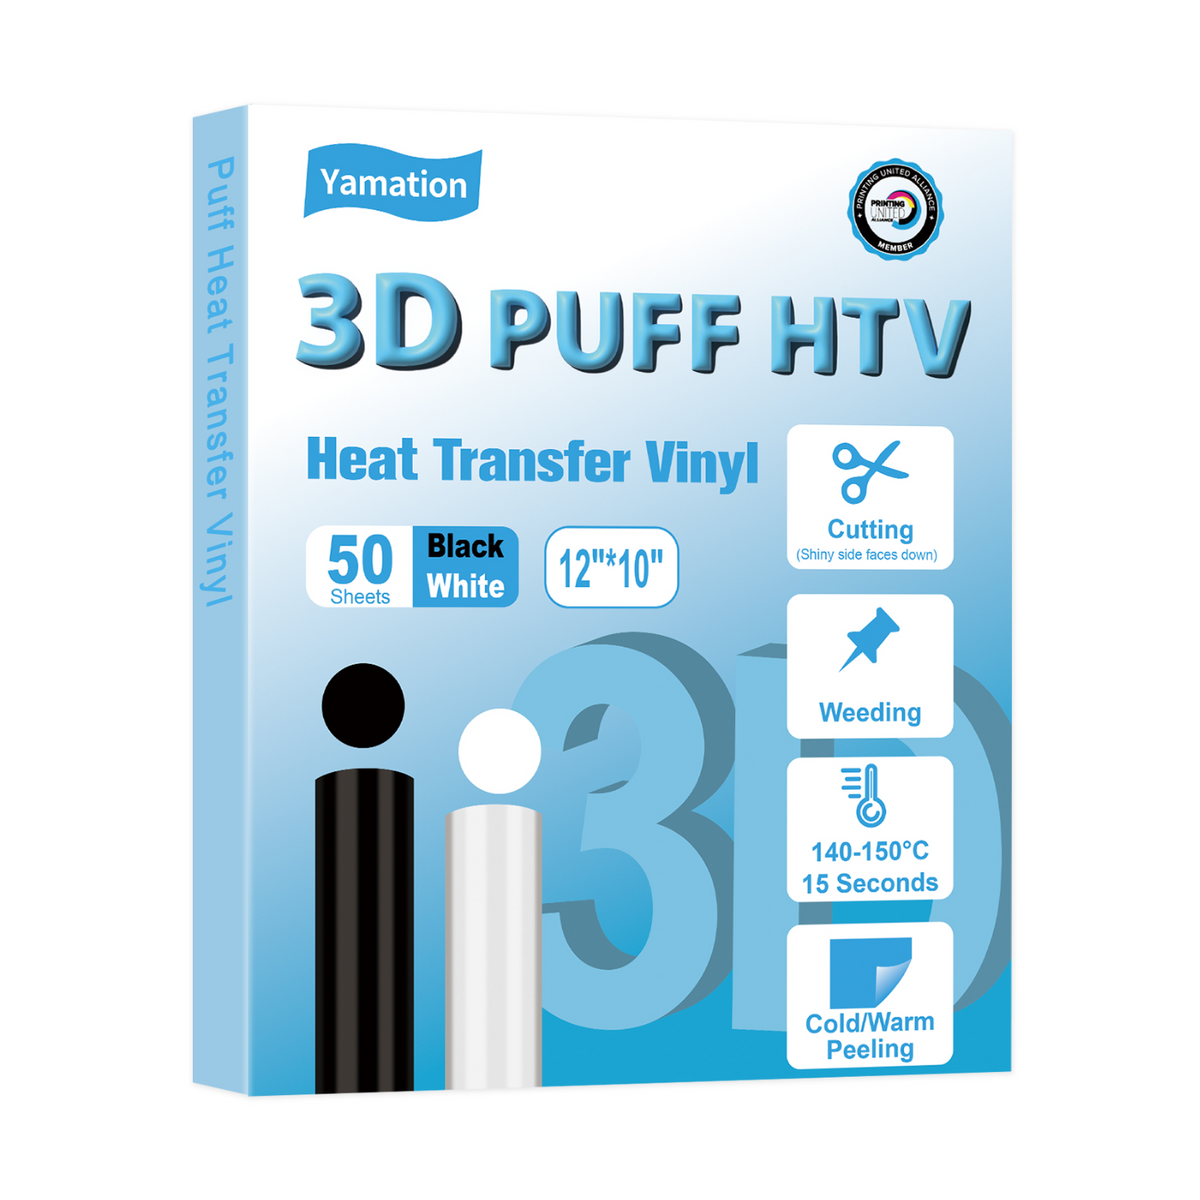 Yamation Vinyl Heat Transfer - 3D Puff(12 x 10) - (Black+White) - 50  Sheets